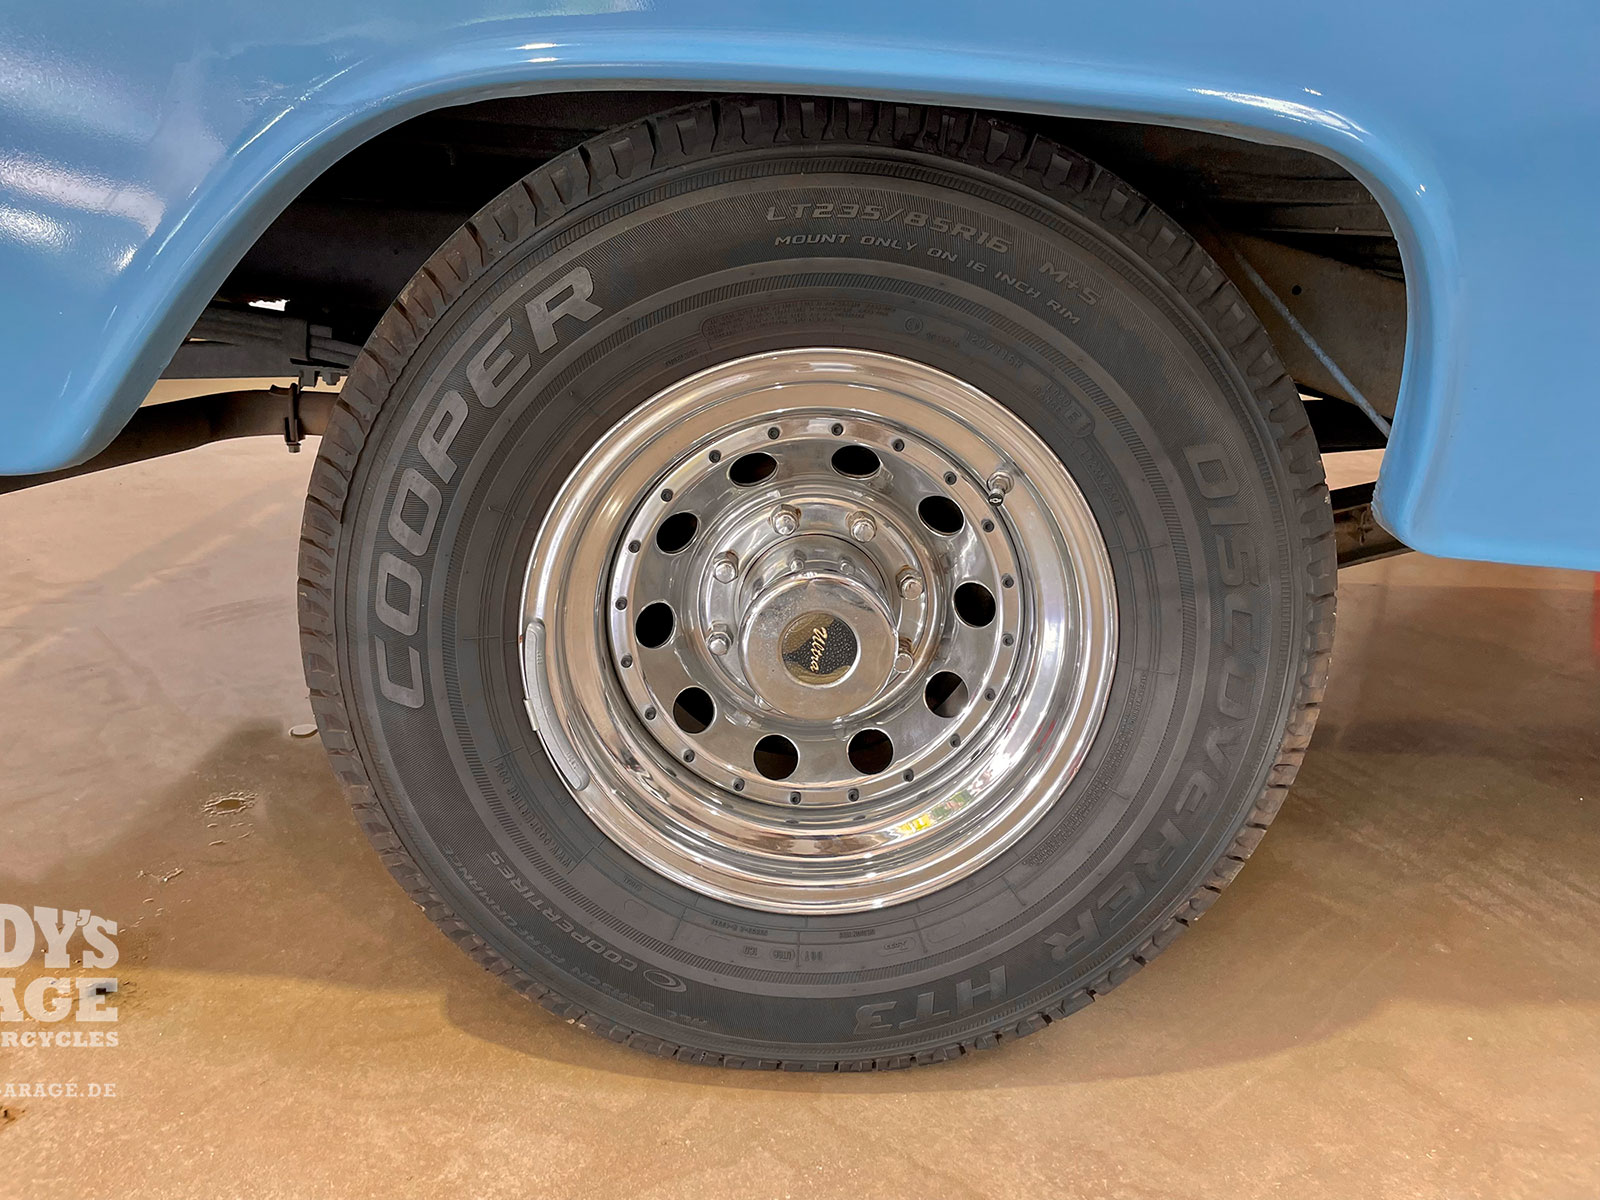 Chevrolet C 20 Pickup | Buddy's Garage Bad Oeynhausen